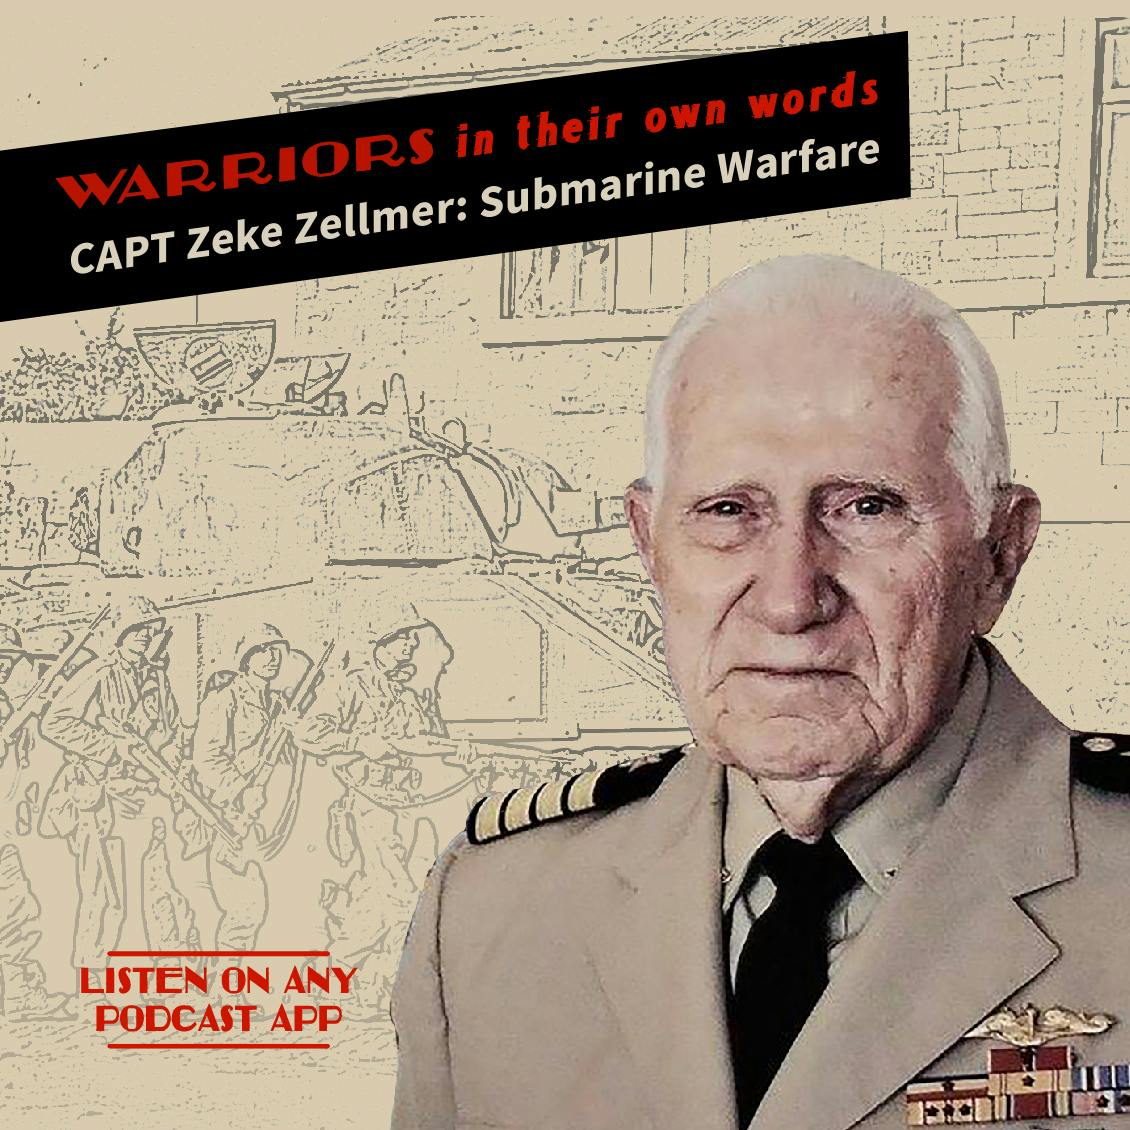 CAPT Zeke Zellmer: Submarine Warfare